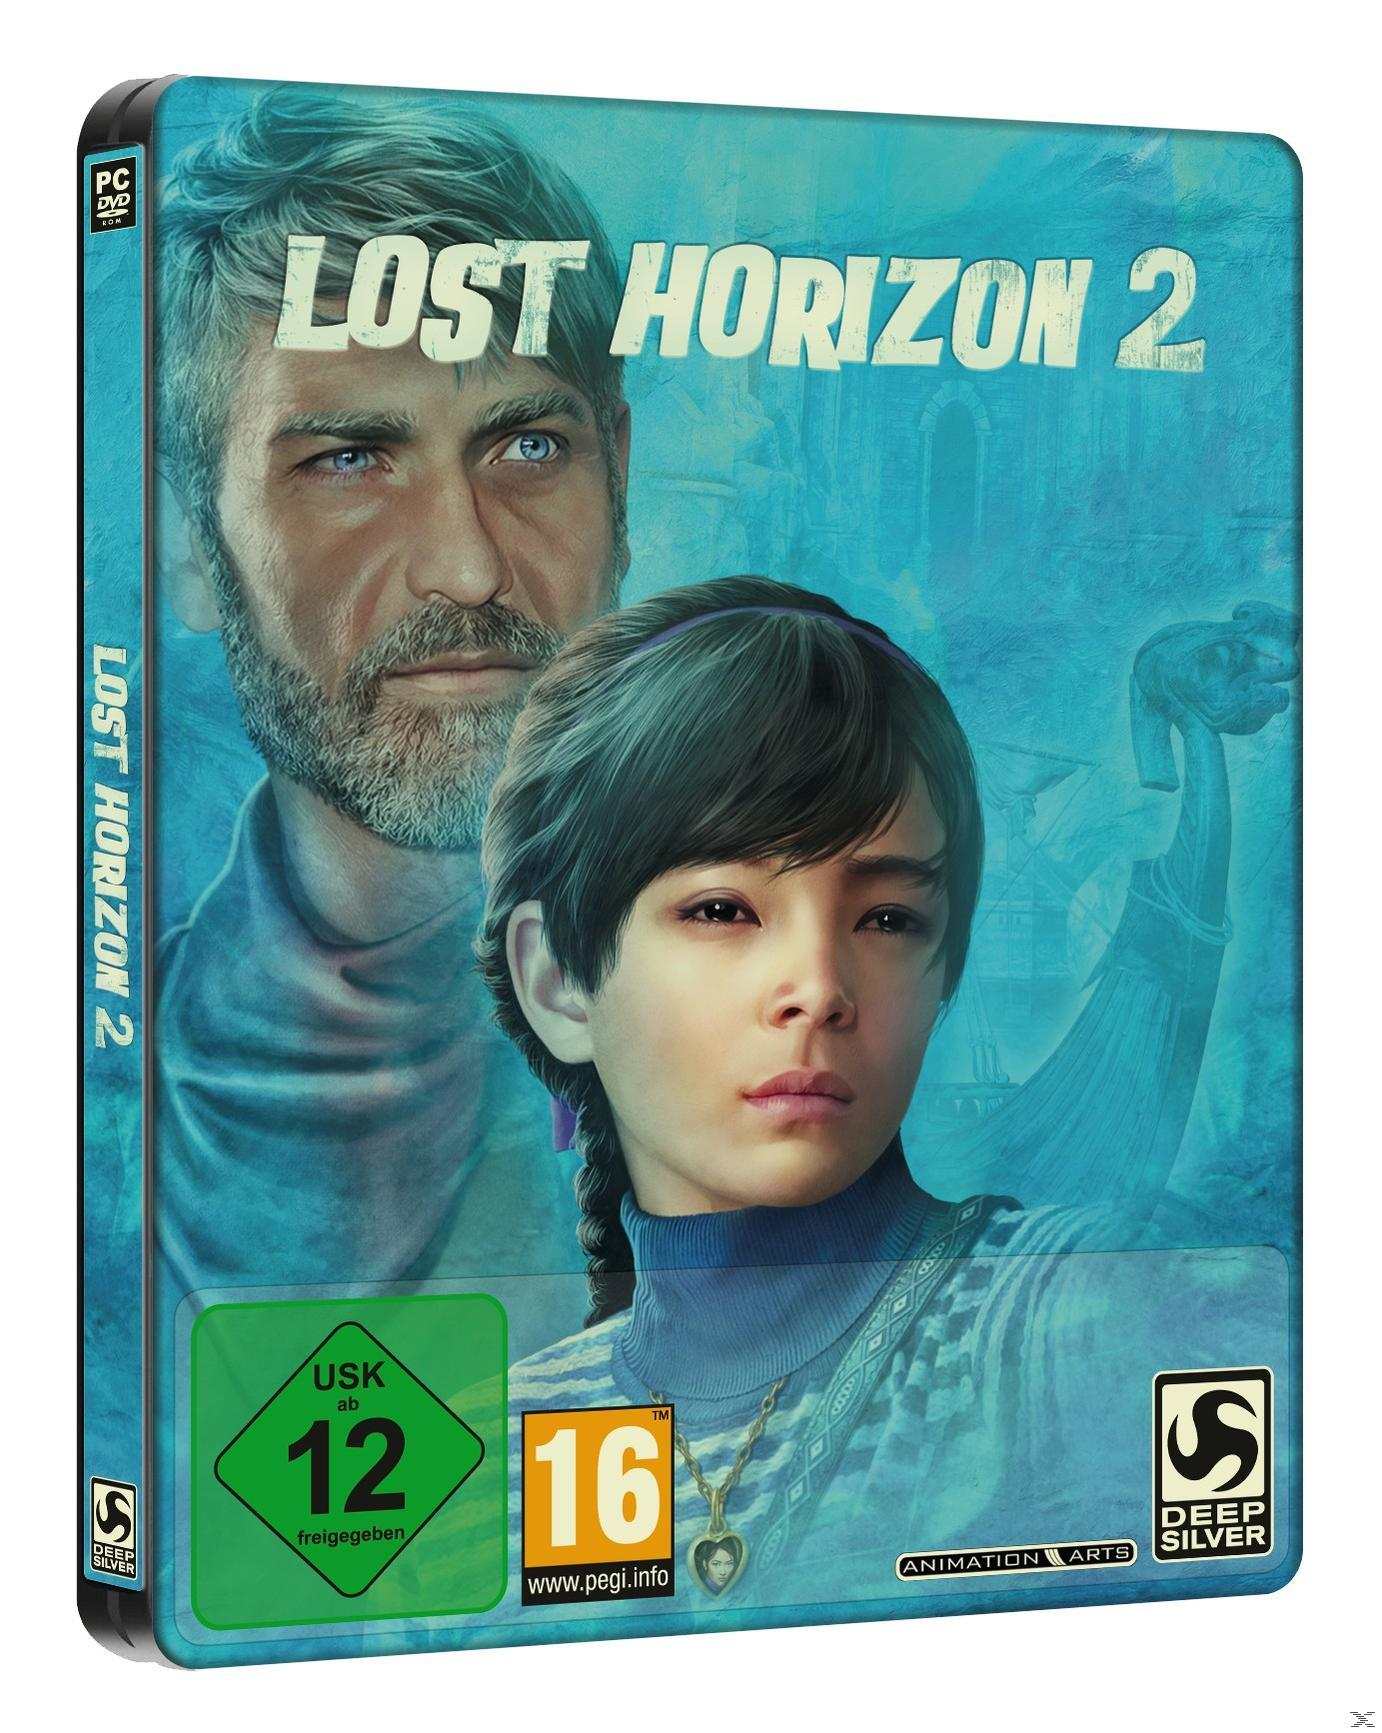 LOST HORIZON 2 (STEEL-EDITION) - [PC